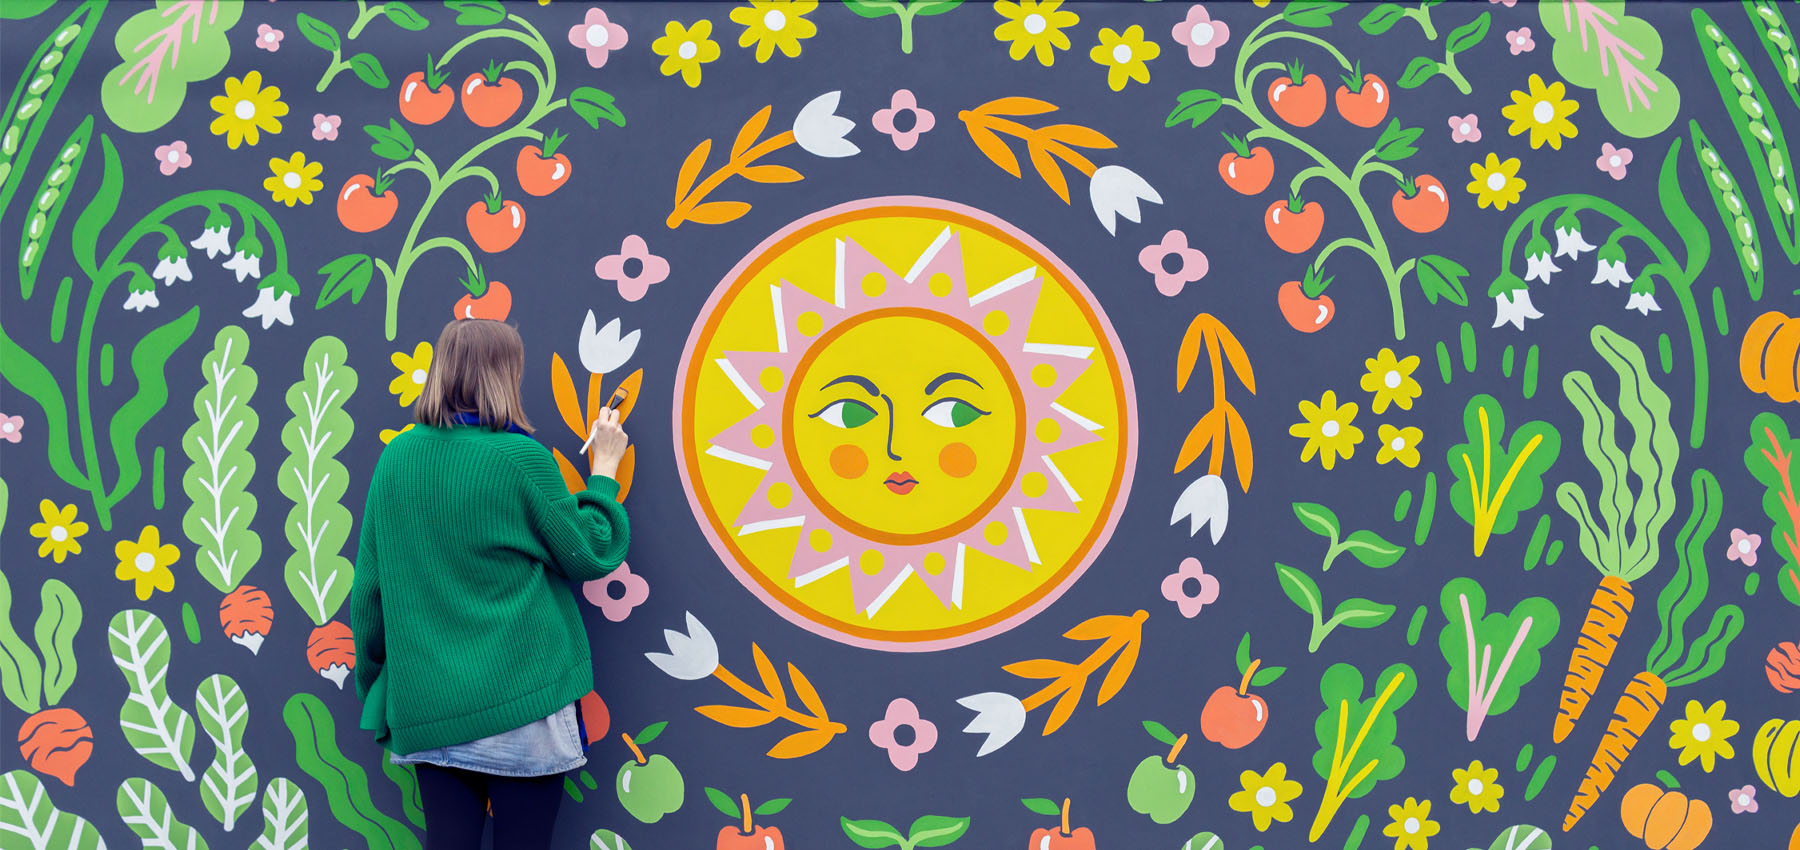 Wall mural celebrates community farm